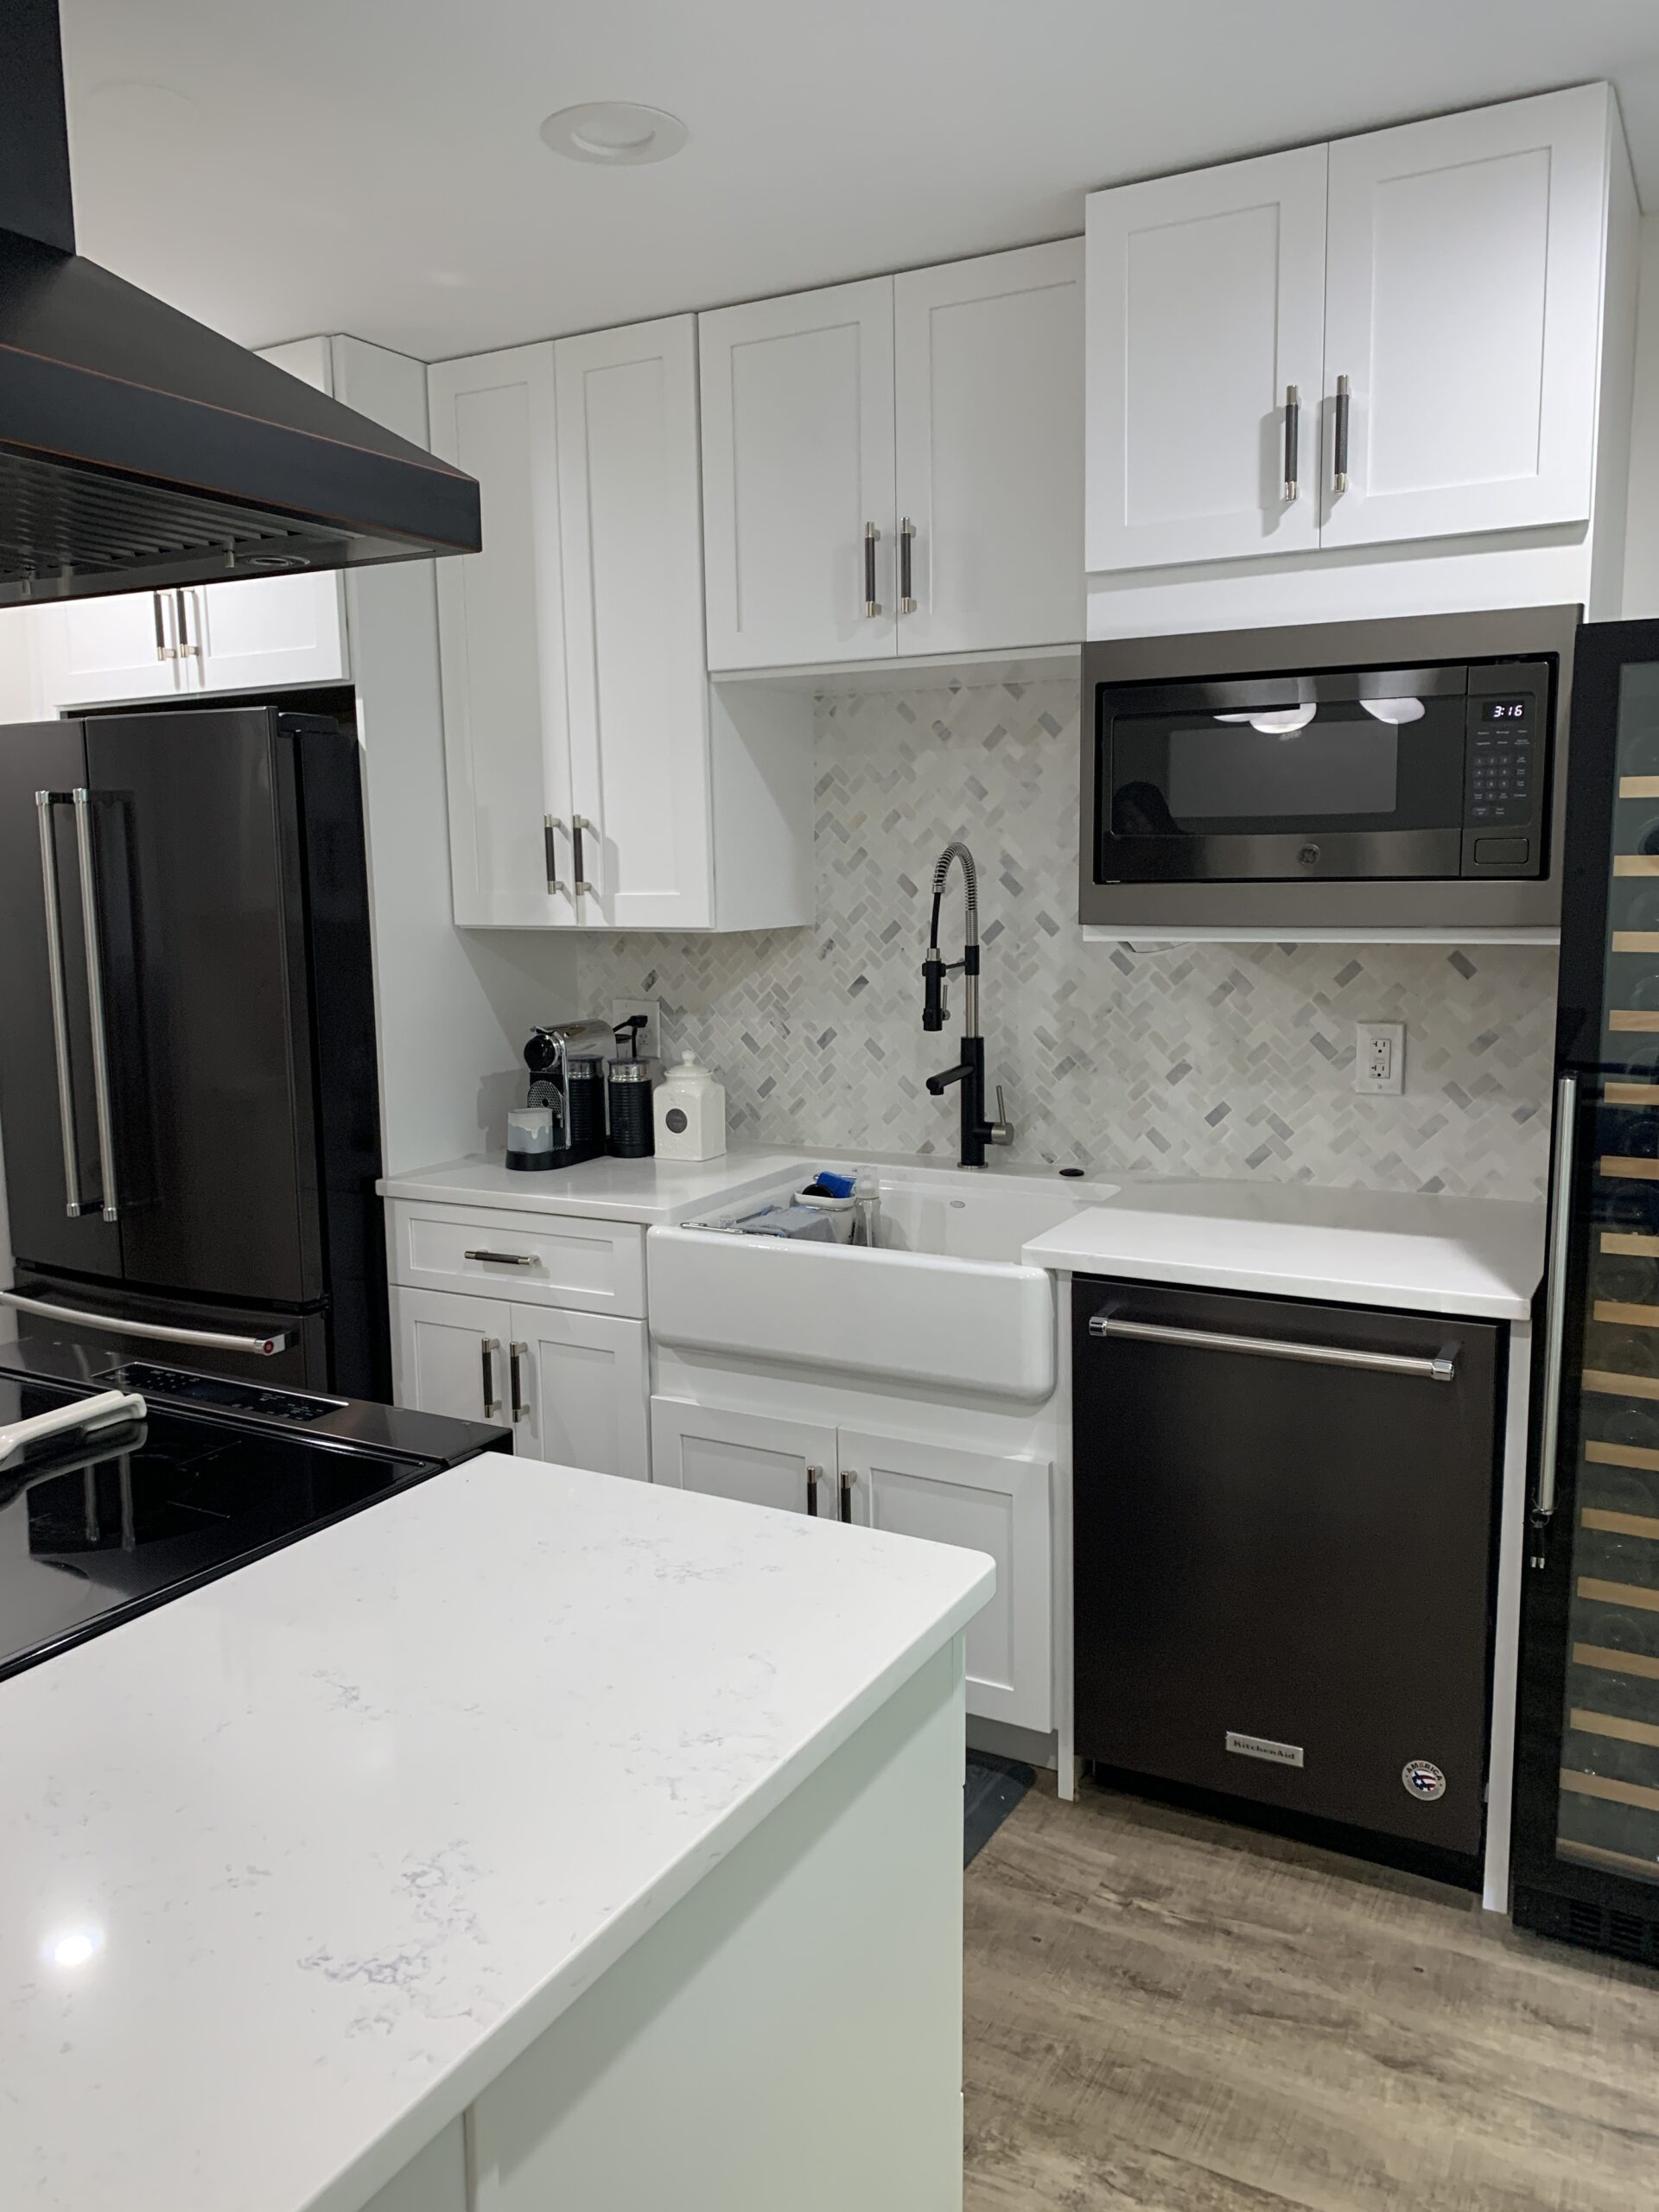 Fairfax, VA - Modern Kitchen & Home Remodeling & Cabinets in Sterling VA